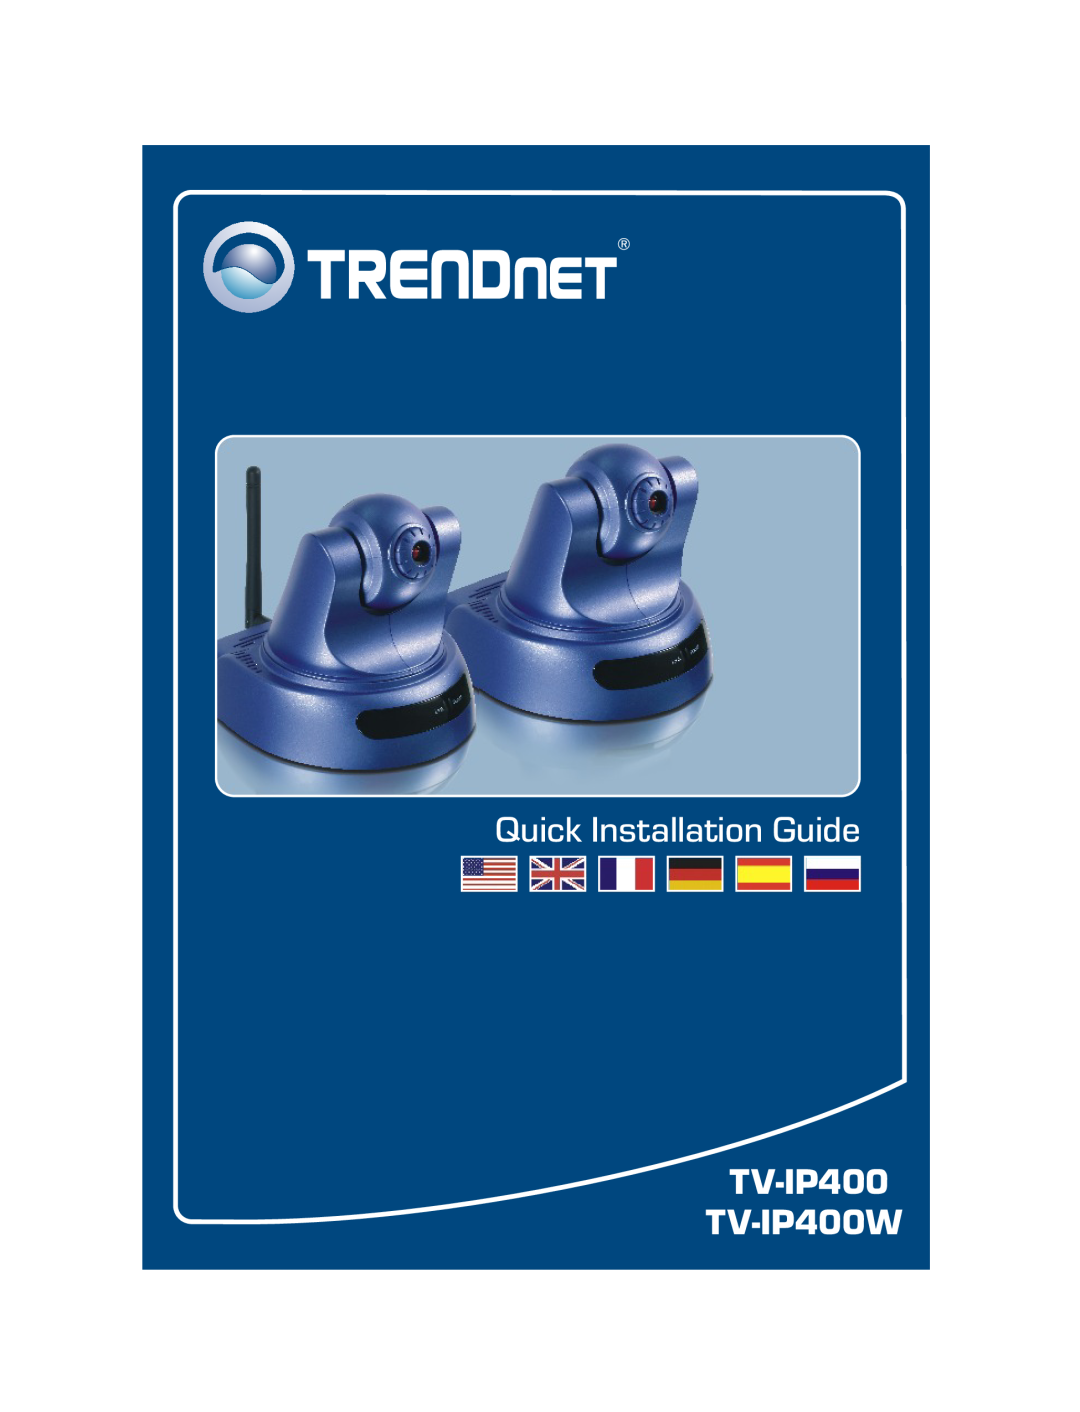 TRENDnet TPL-310AP, TRENDNET manual 1.01, Quick Installation Guide 